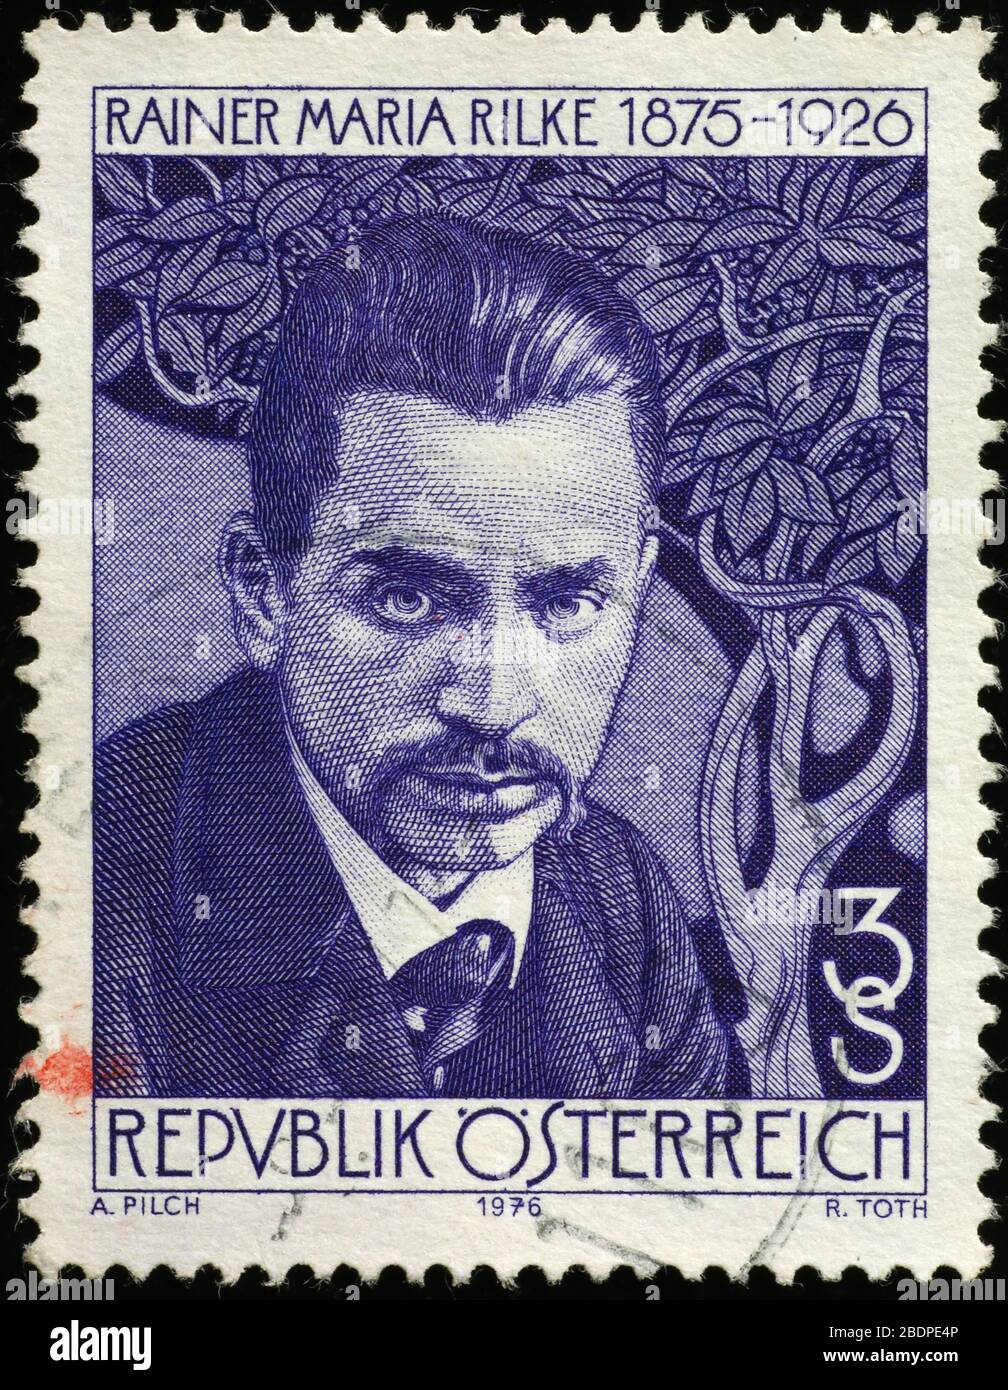 Rainer Maria Rilke on old austrian postage stamp Stock Photo